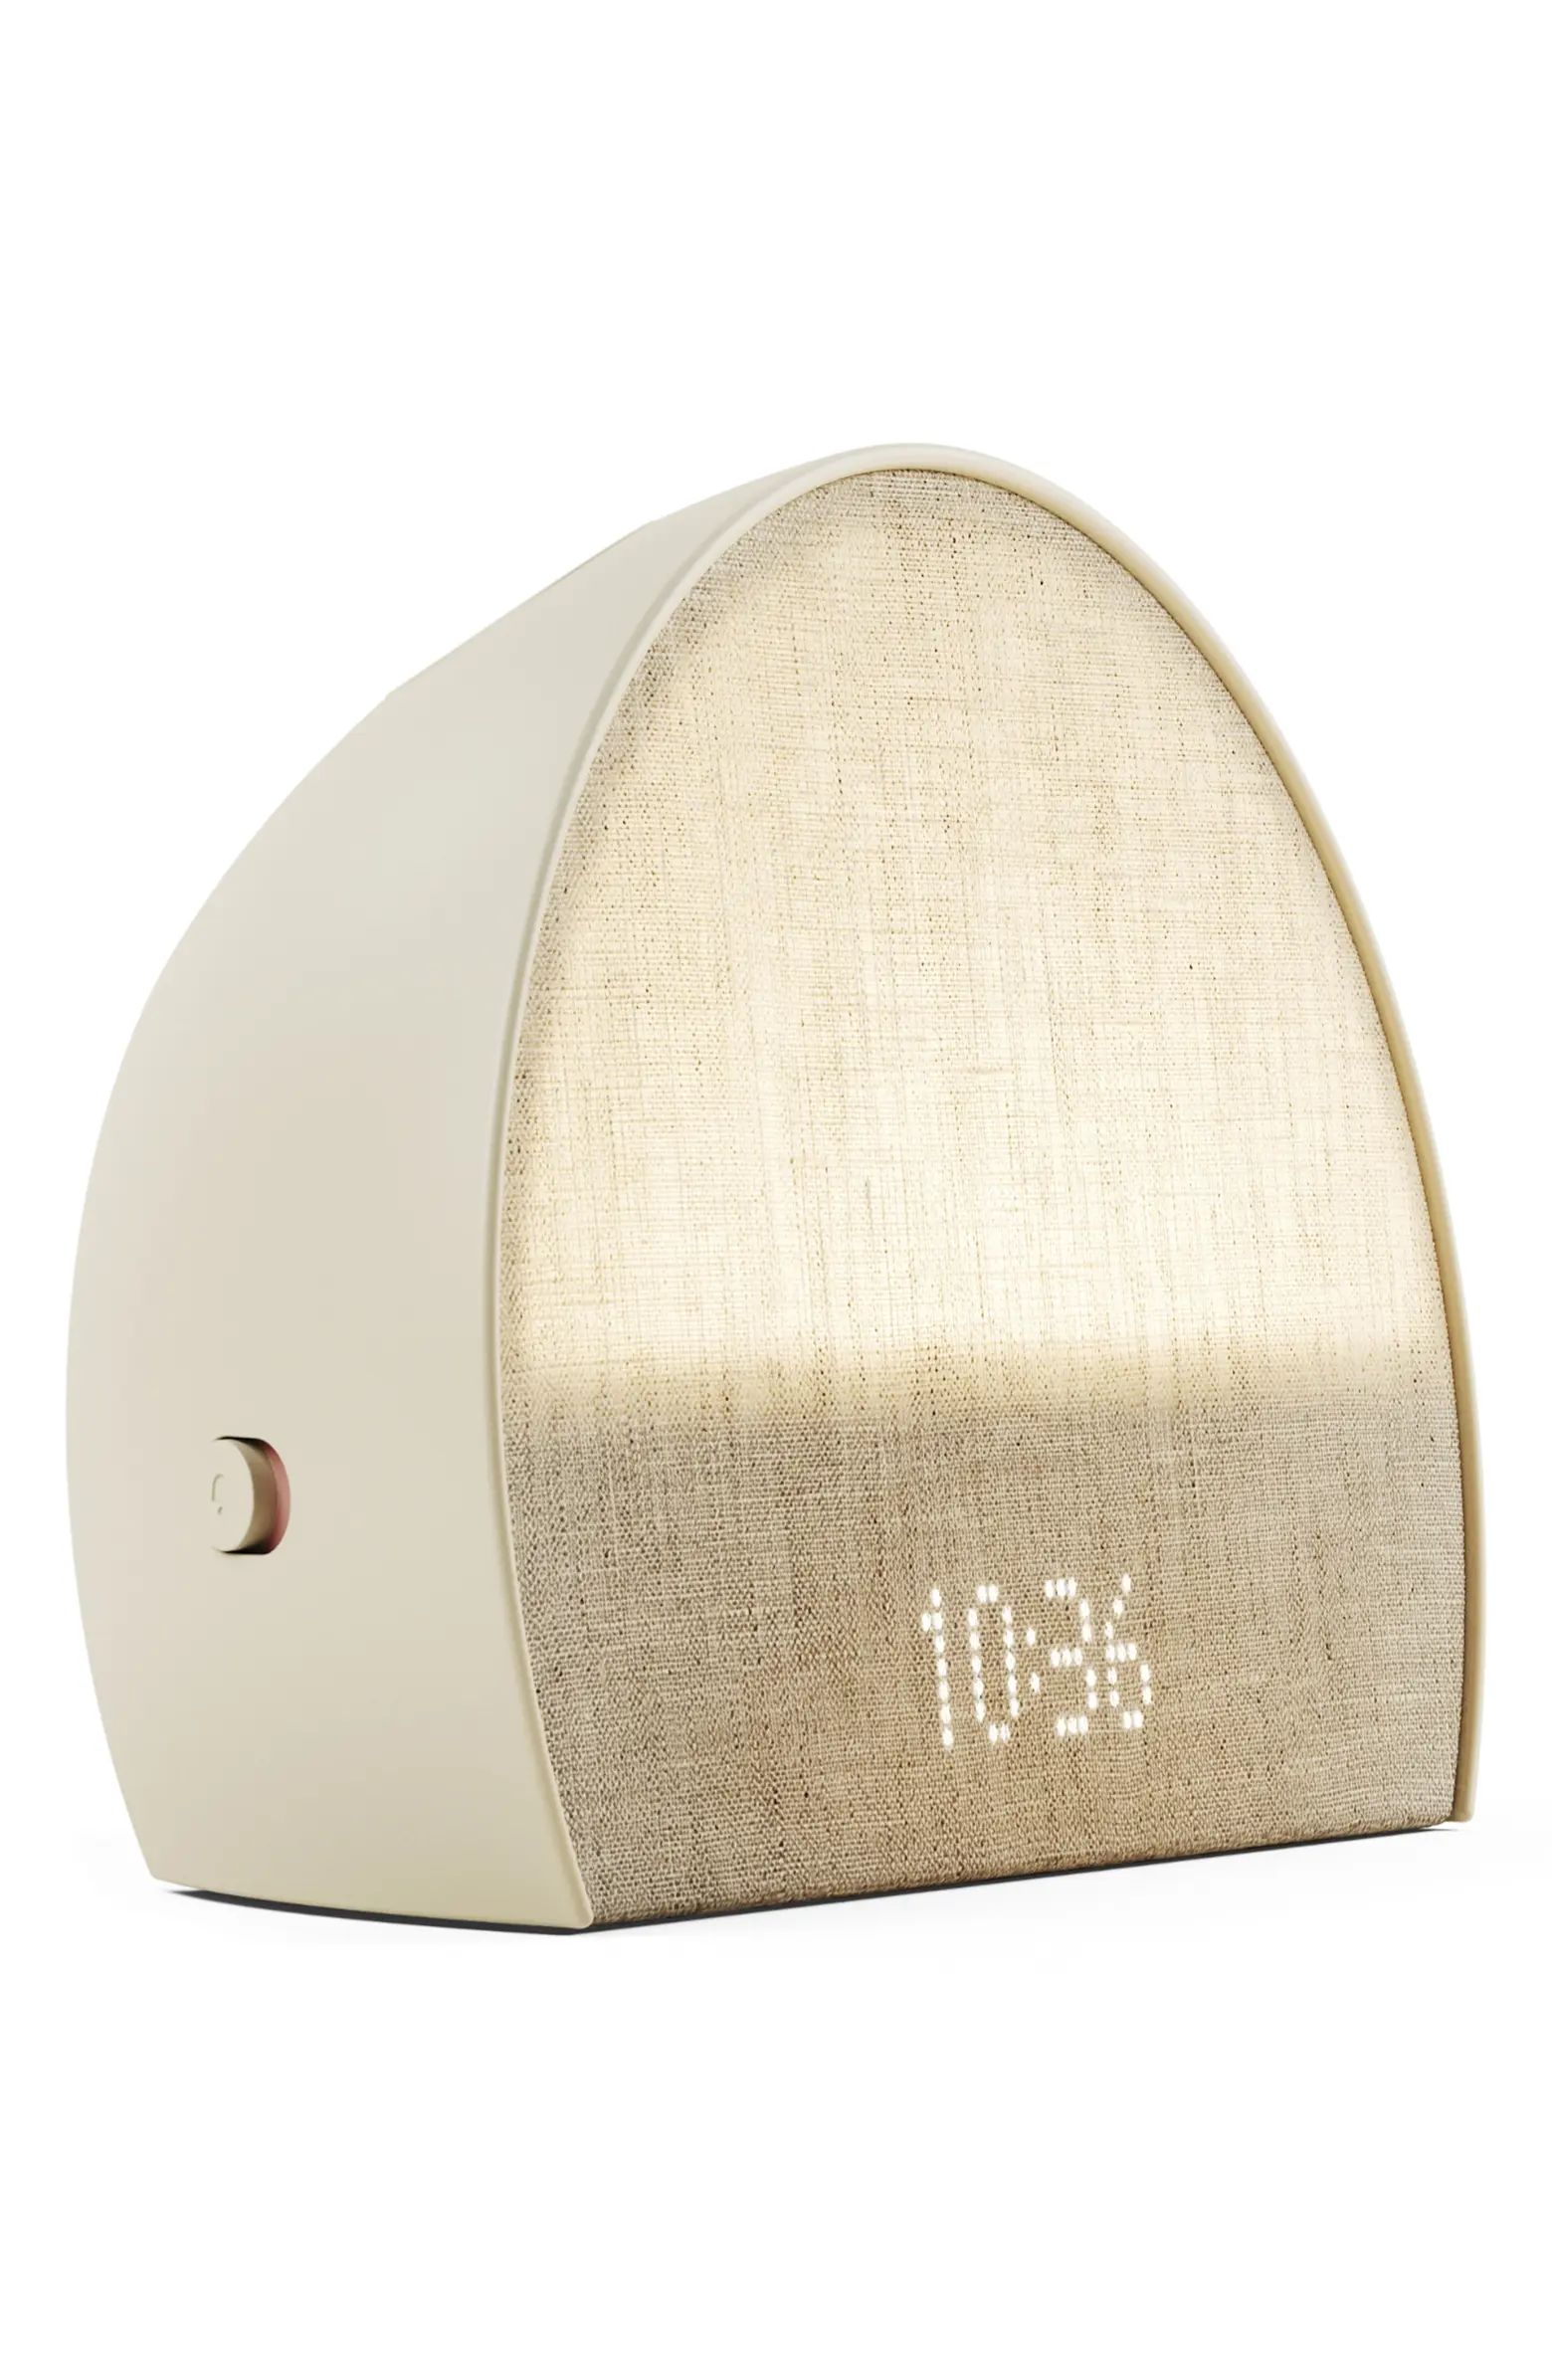 Hatch Restore 2 Bedside Light, Sound Machine & Sunrise Alarm Clock | Nordstrom